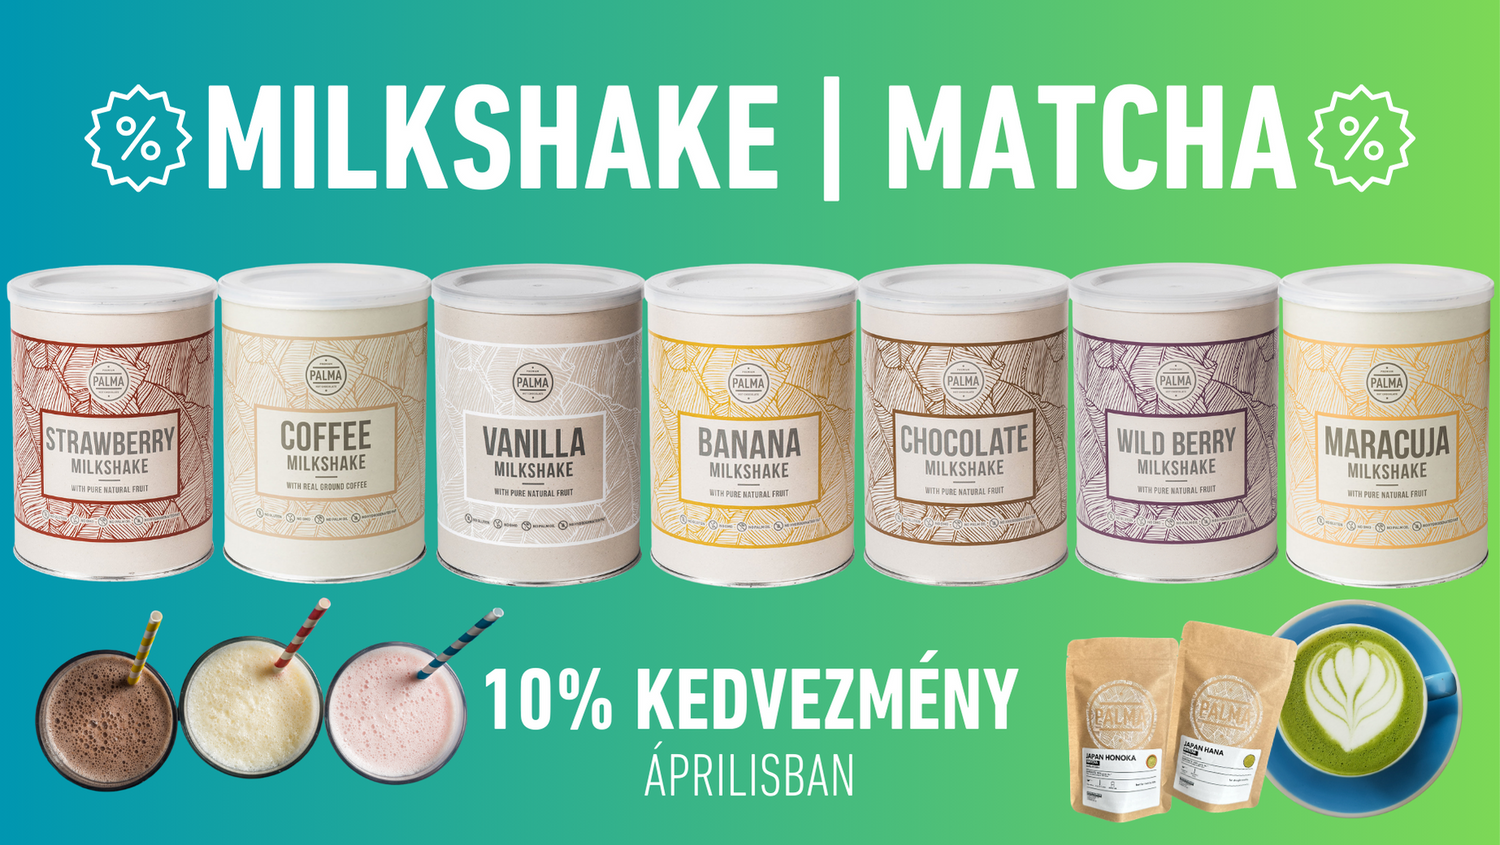 PALMA milkshake matcha offer